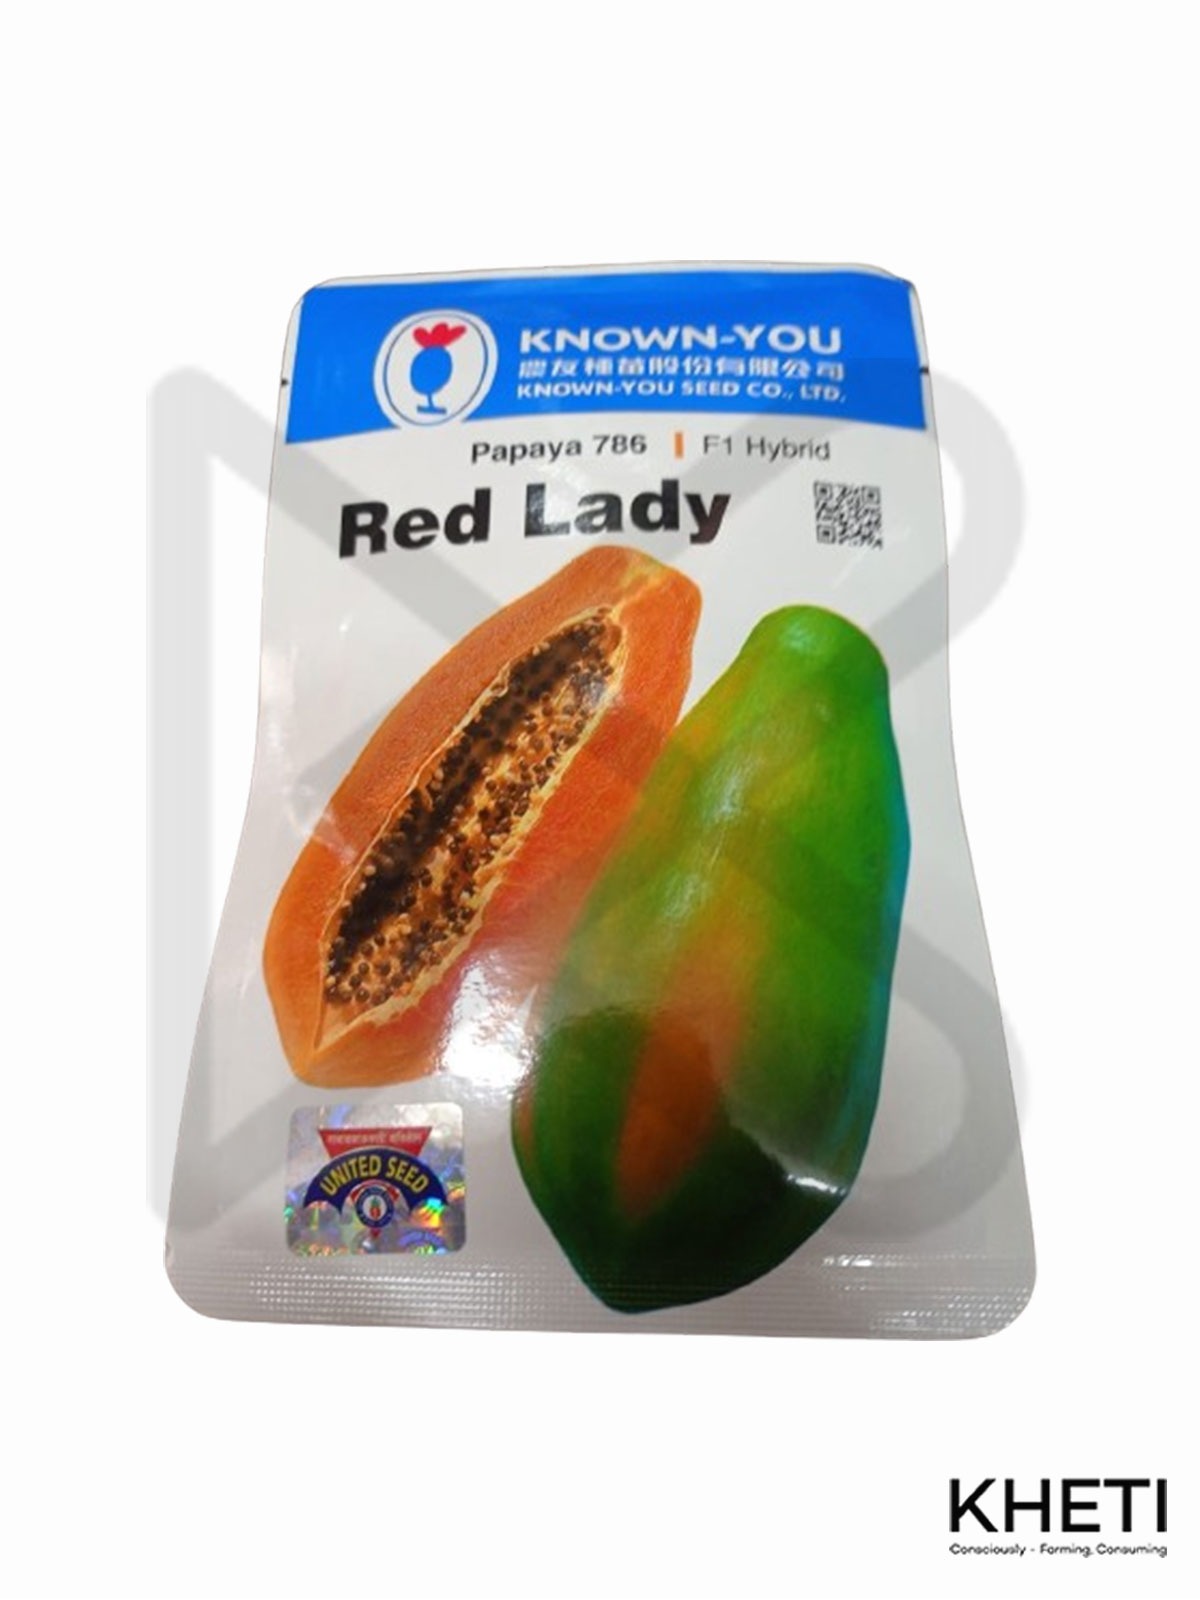 Red Lady Papaya seed